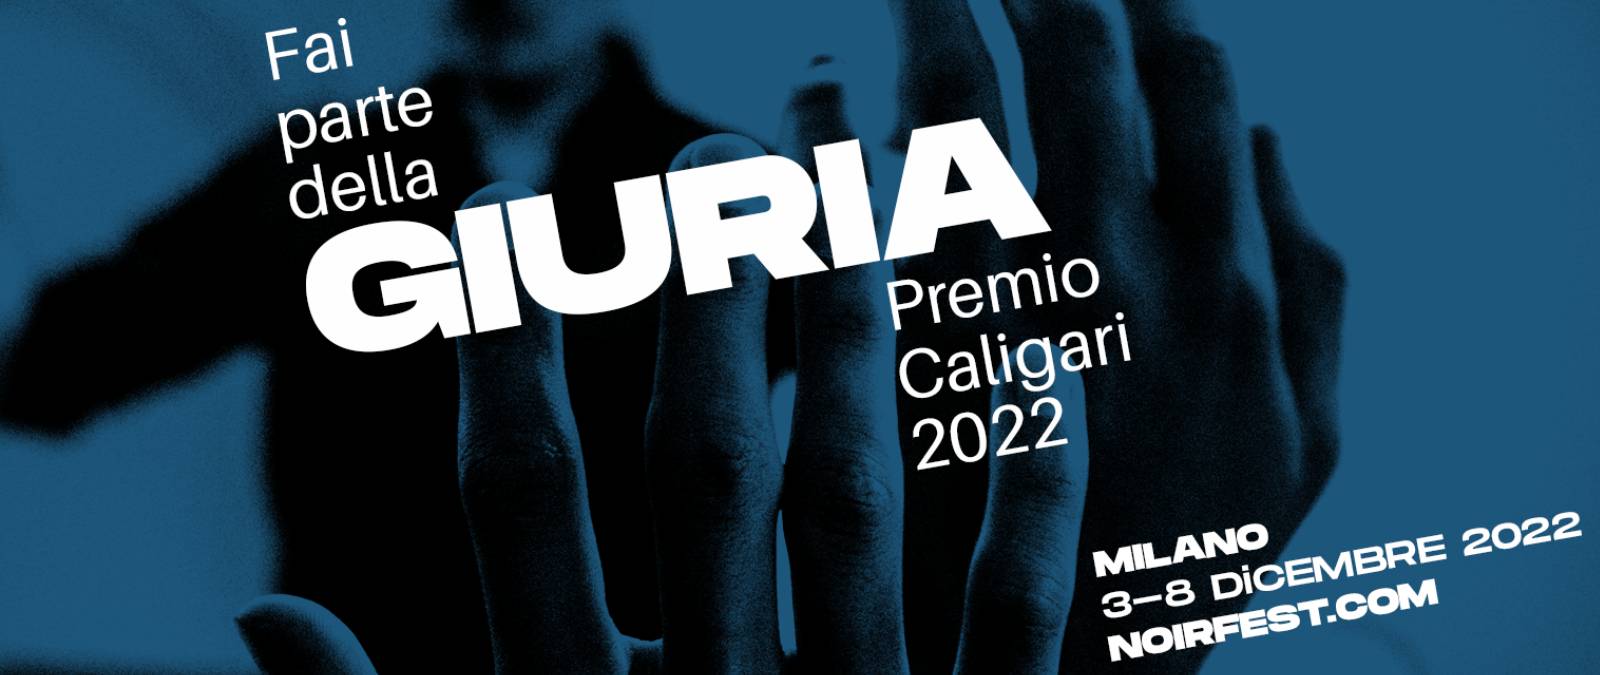 Premio Caligari 2022